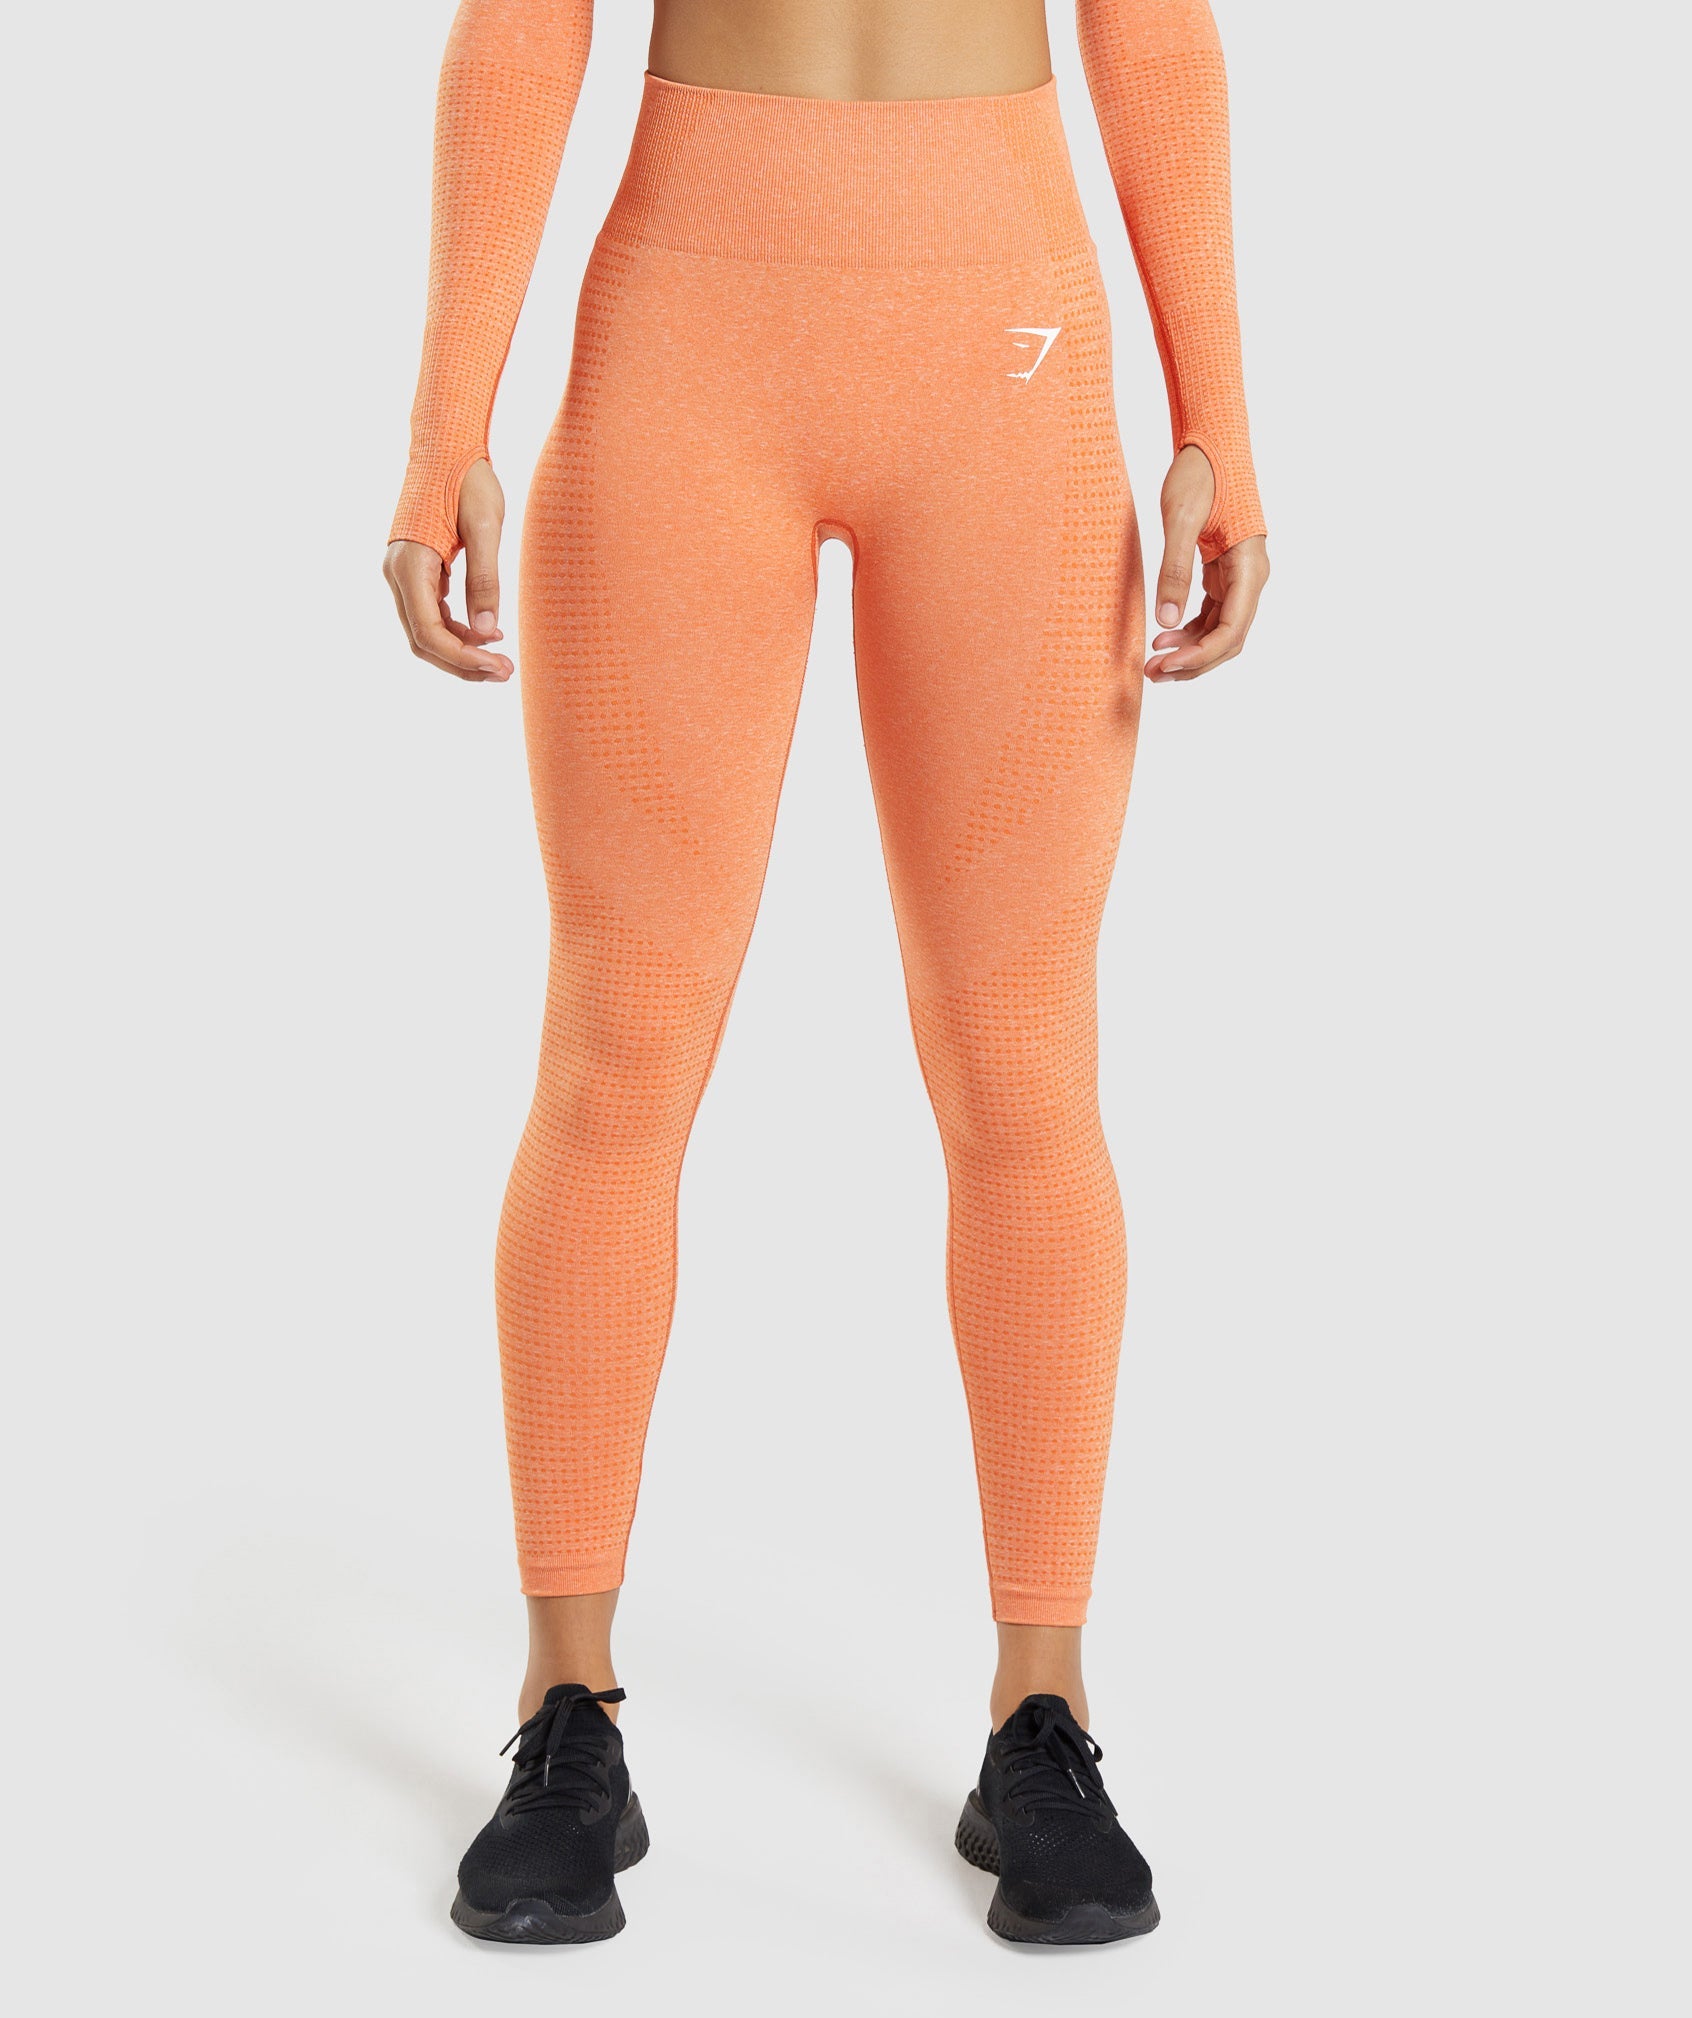 GYMSHARK Women's Vital Seamless 2.0 Leggings, Tights, Pink-orange